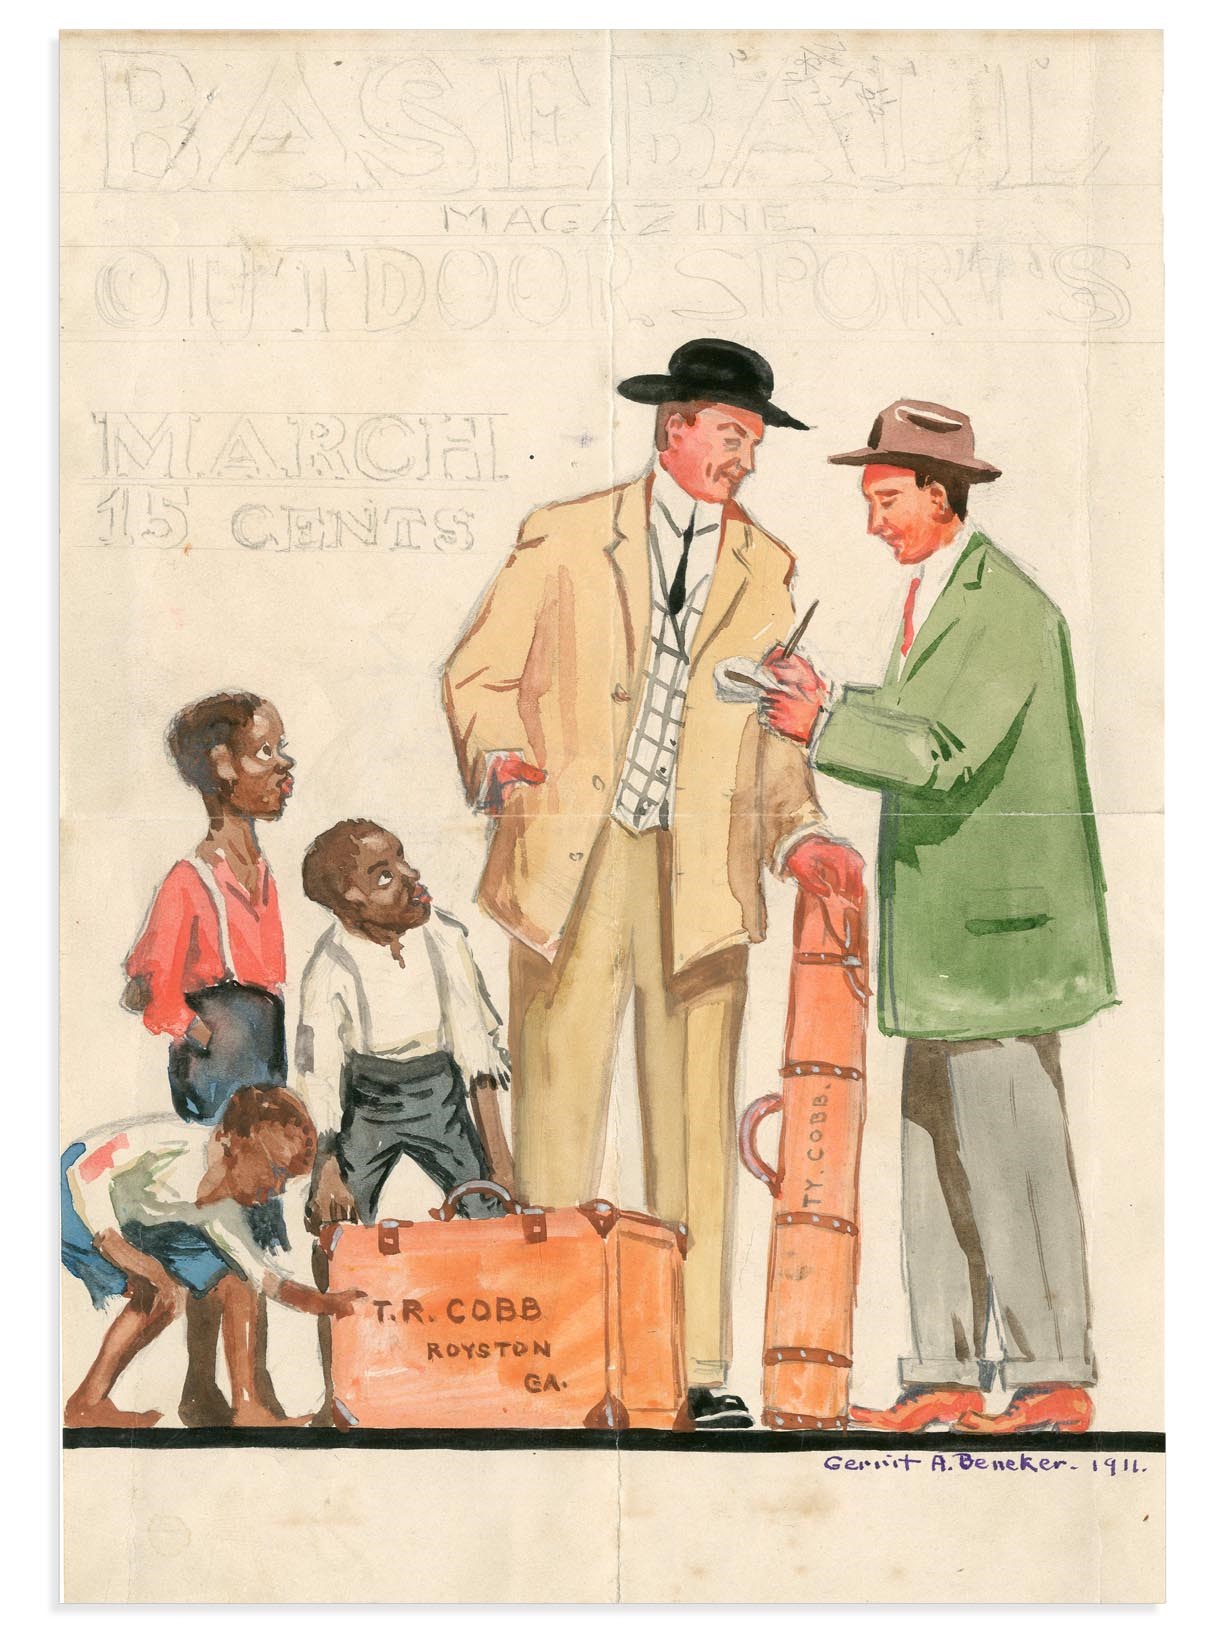 1911 "Ty Cobb Number" Baseball Magazine Cover Art Study by Gerrit Beneker (1882-1934)